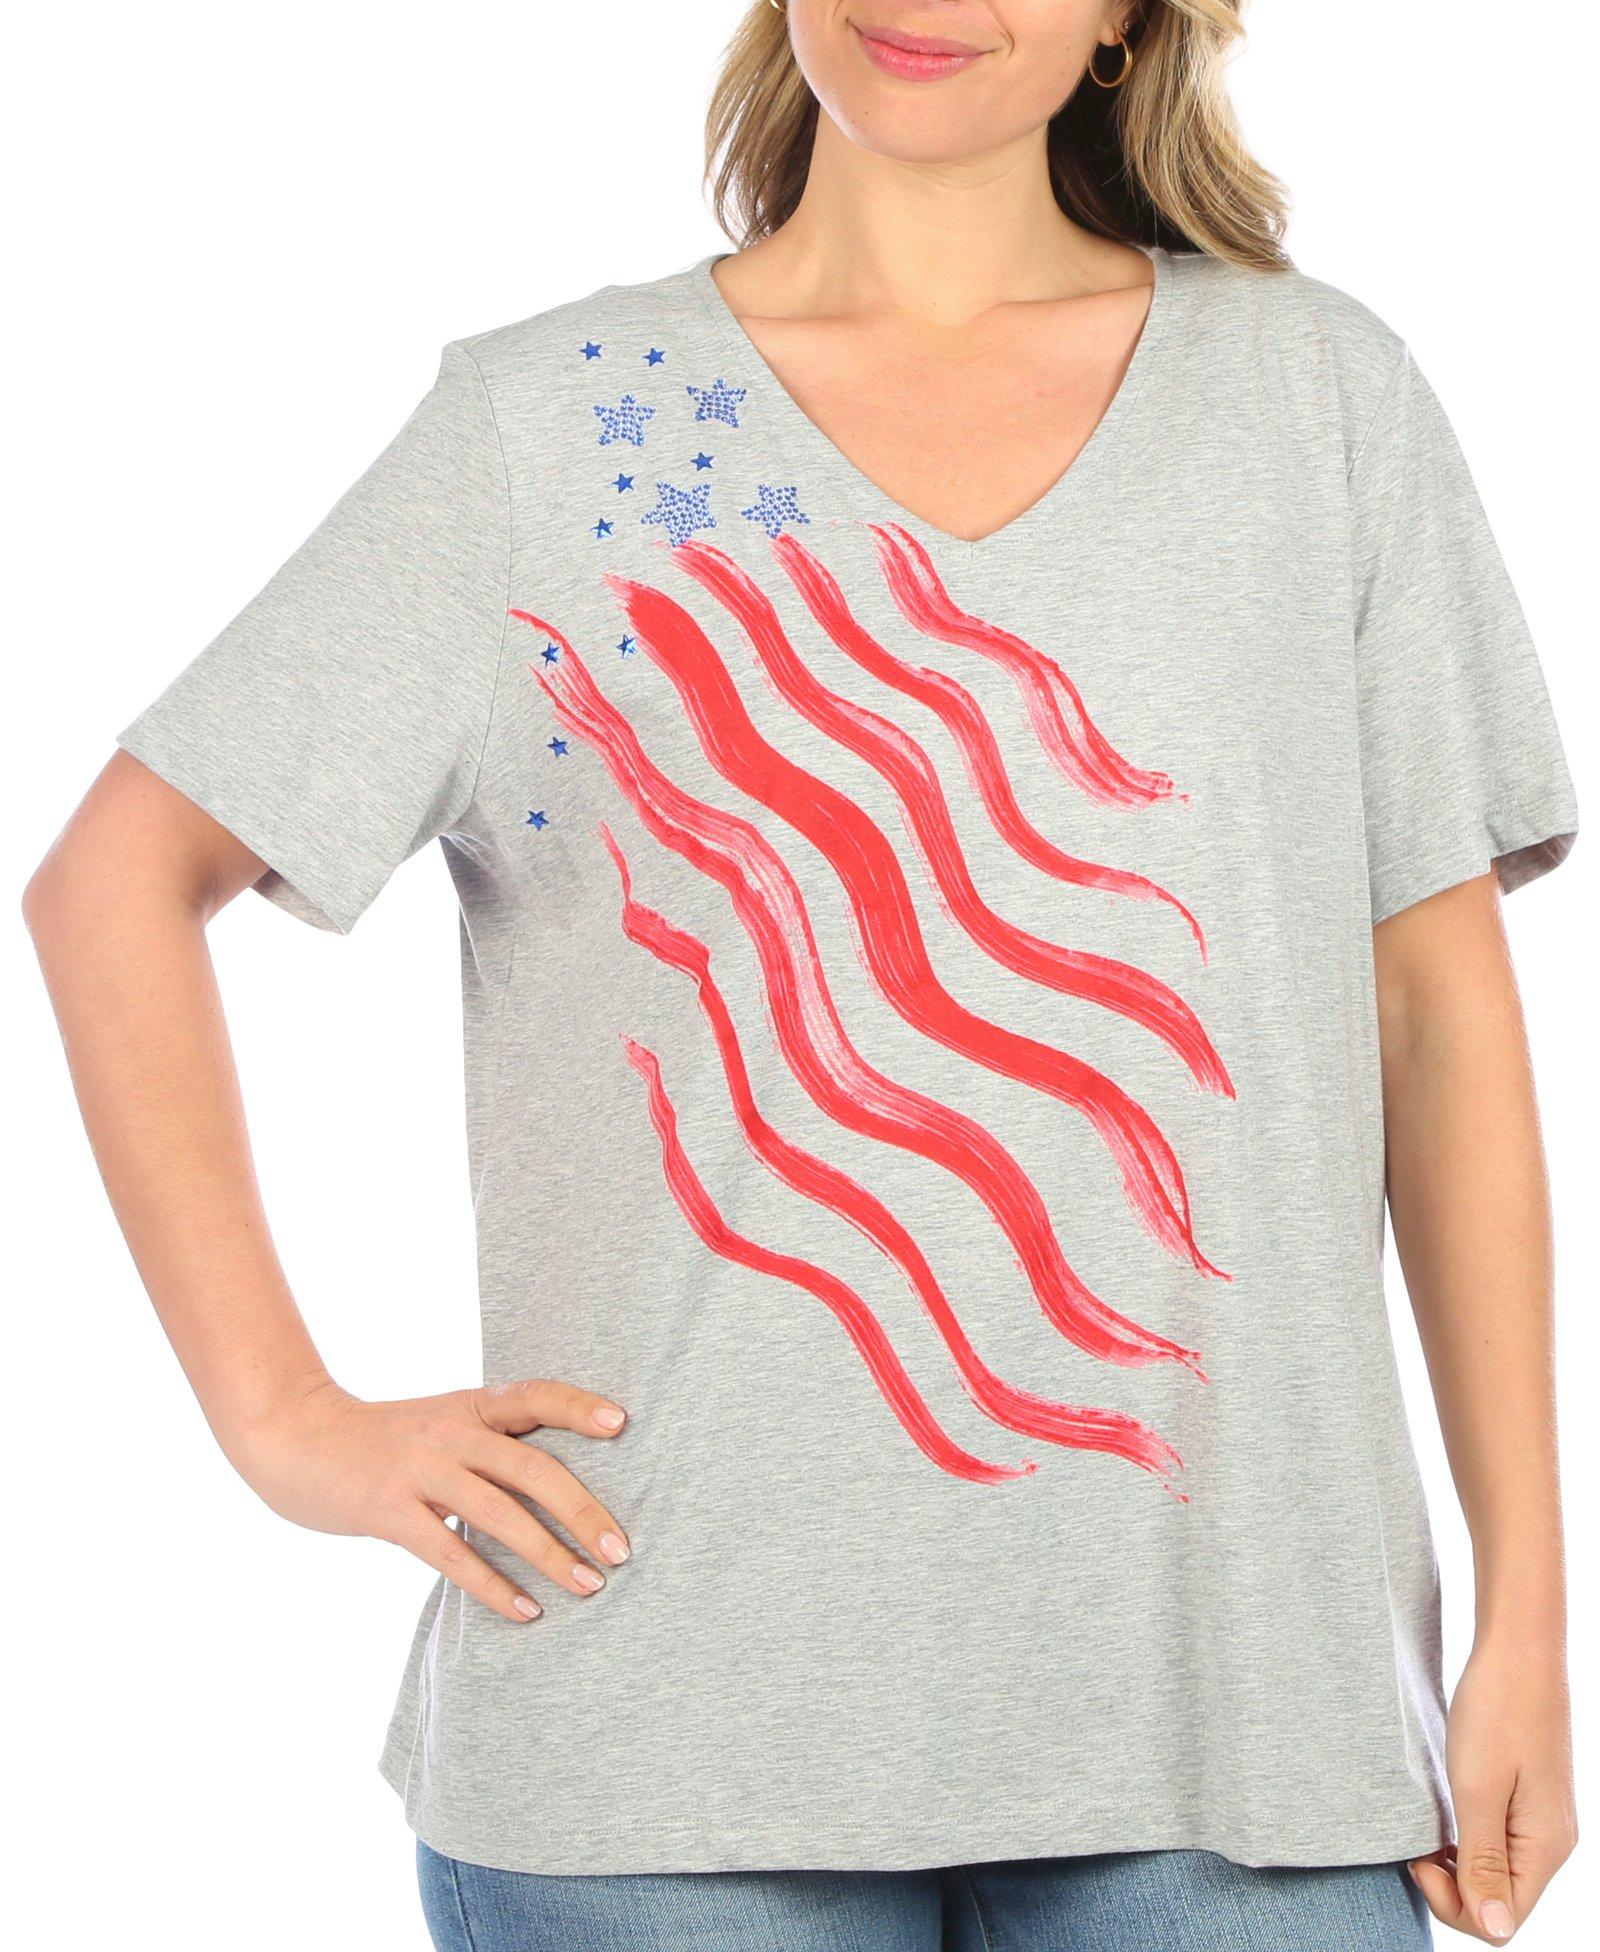 Womens Americana Flag Waves Short Sleeve Top